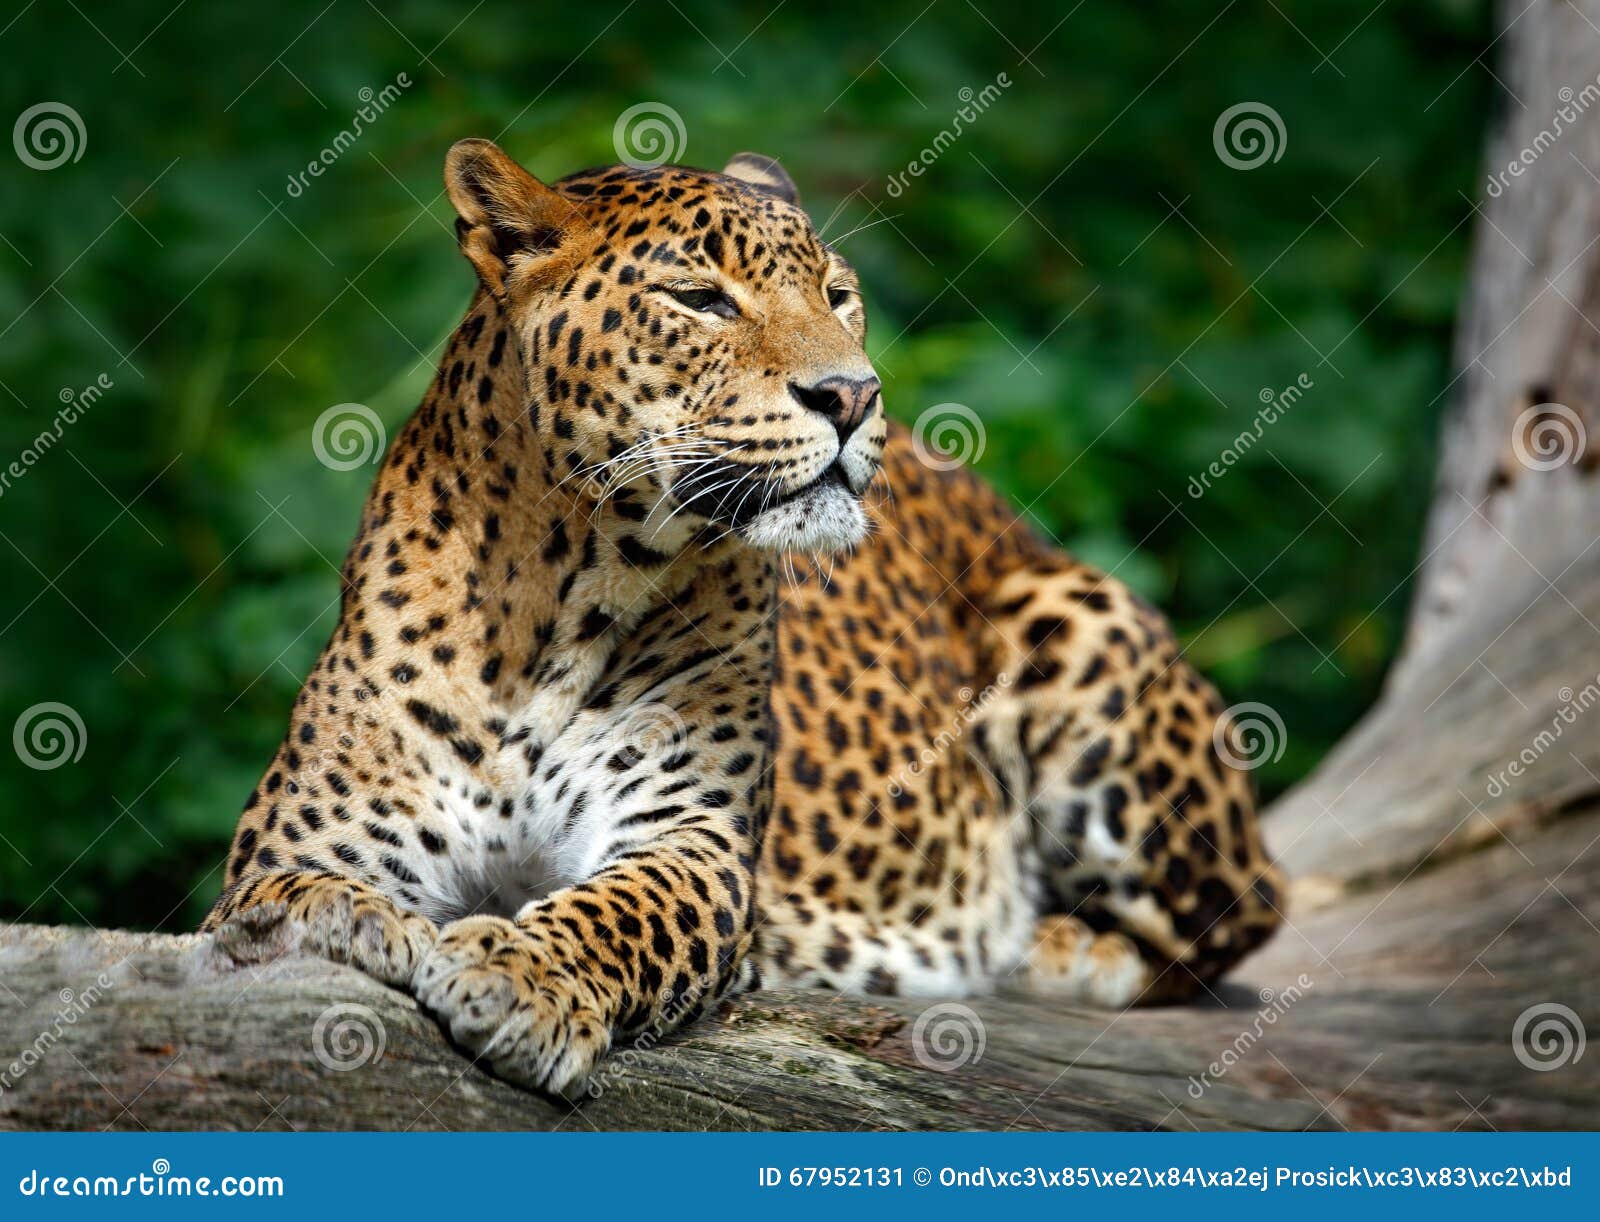 sri lankan leopard, panthera pardus kotiya, big spotted cat lying on the tree in the nature habitat, yala national park, sri lanka